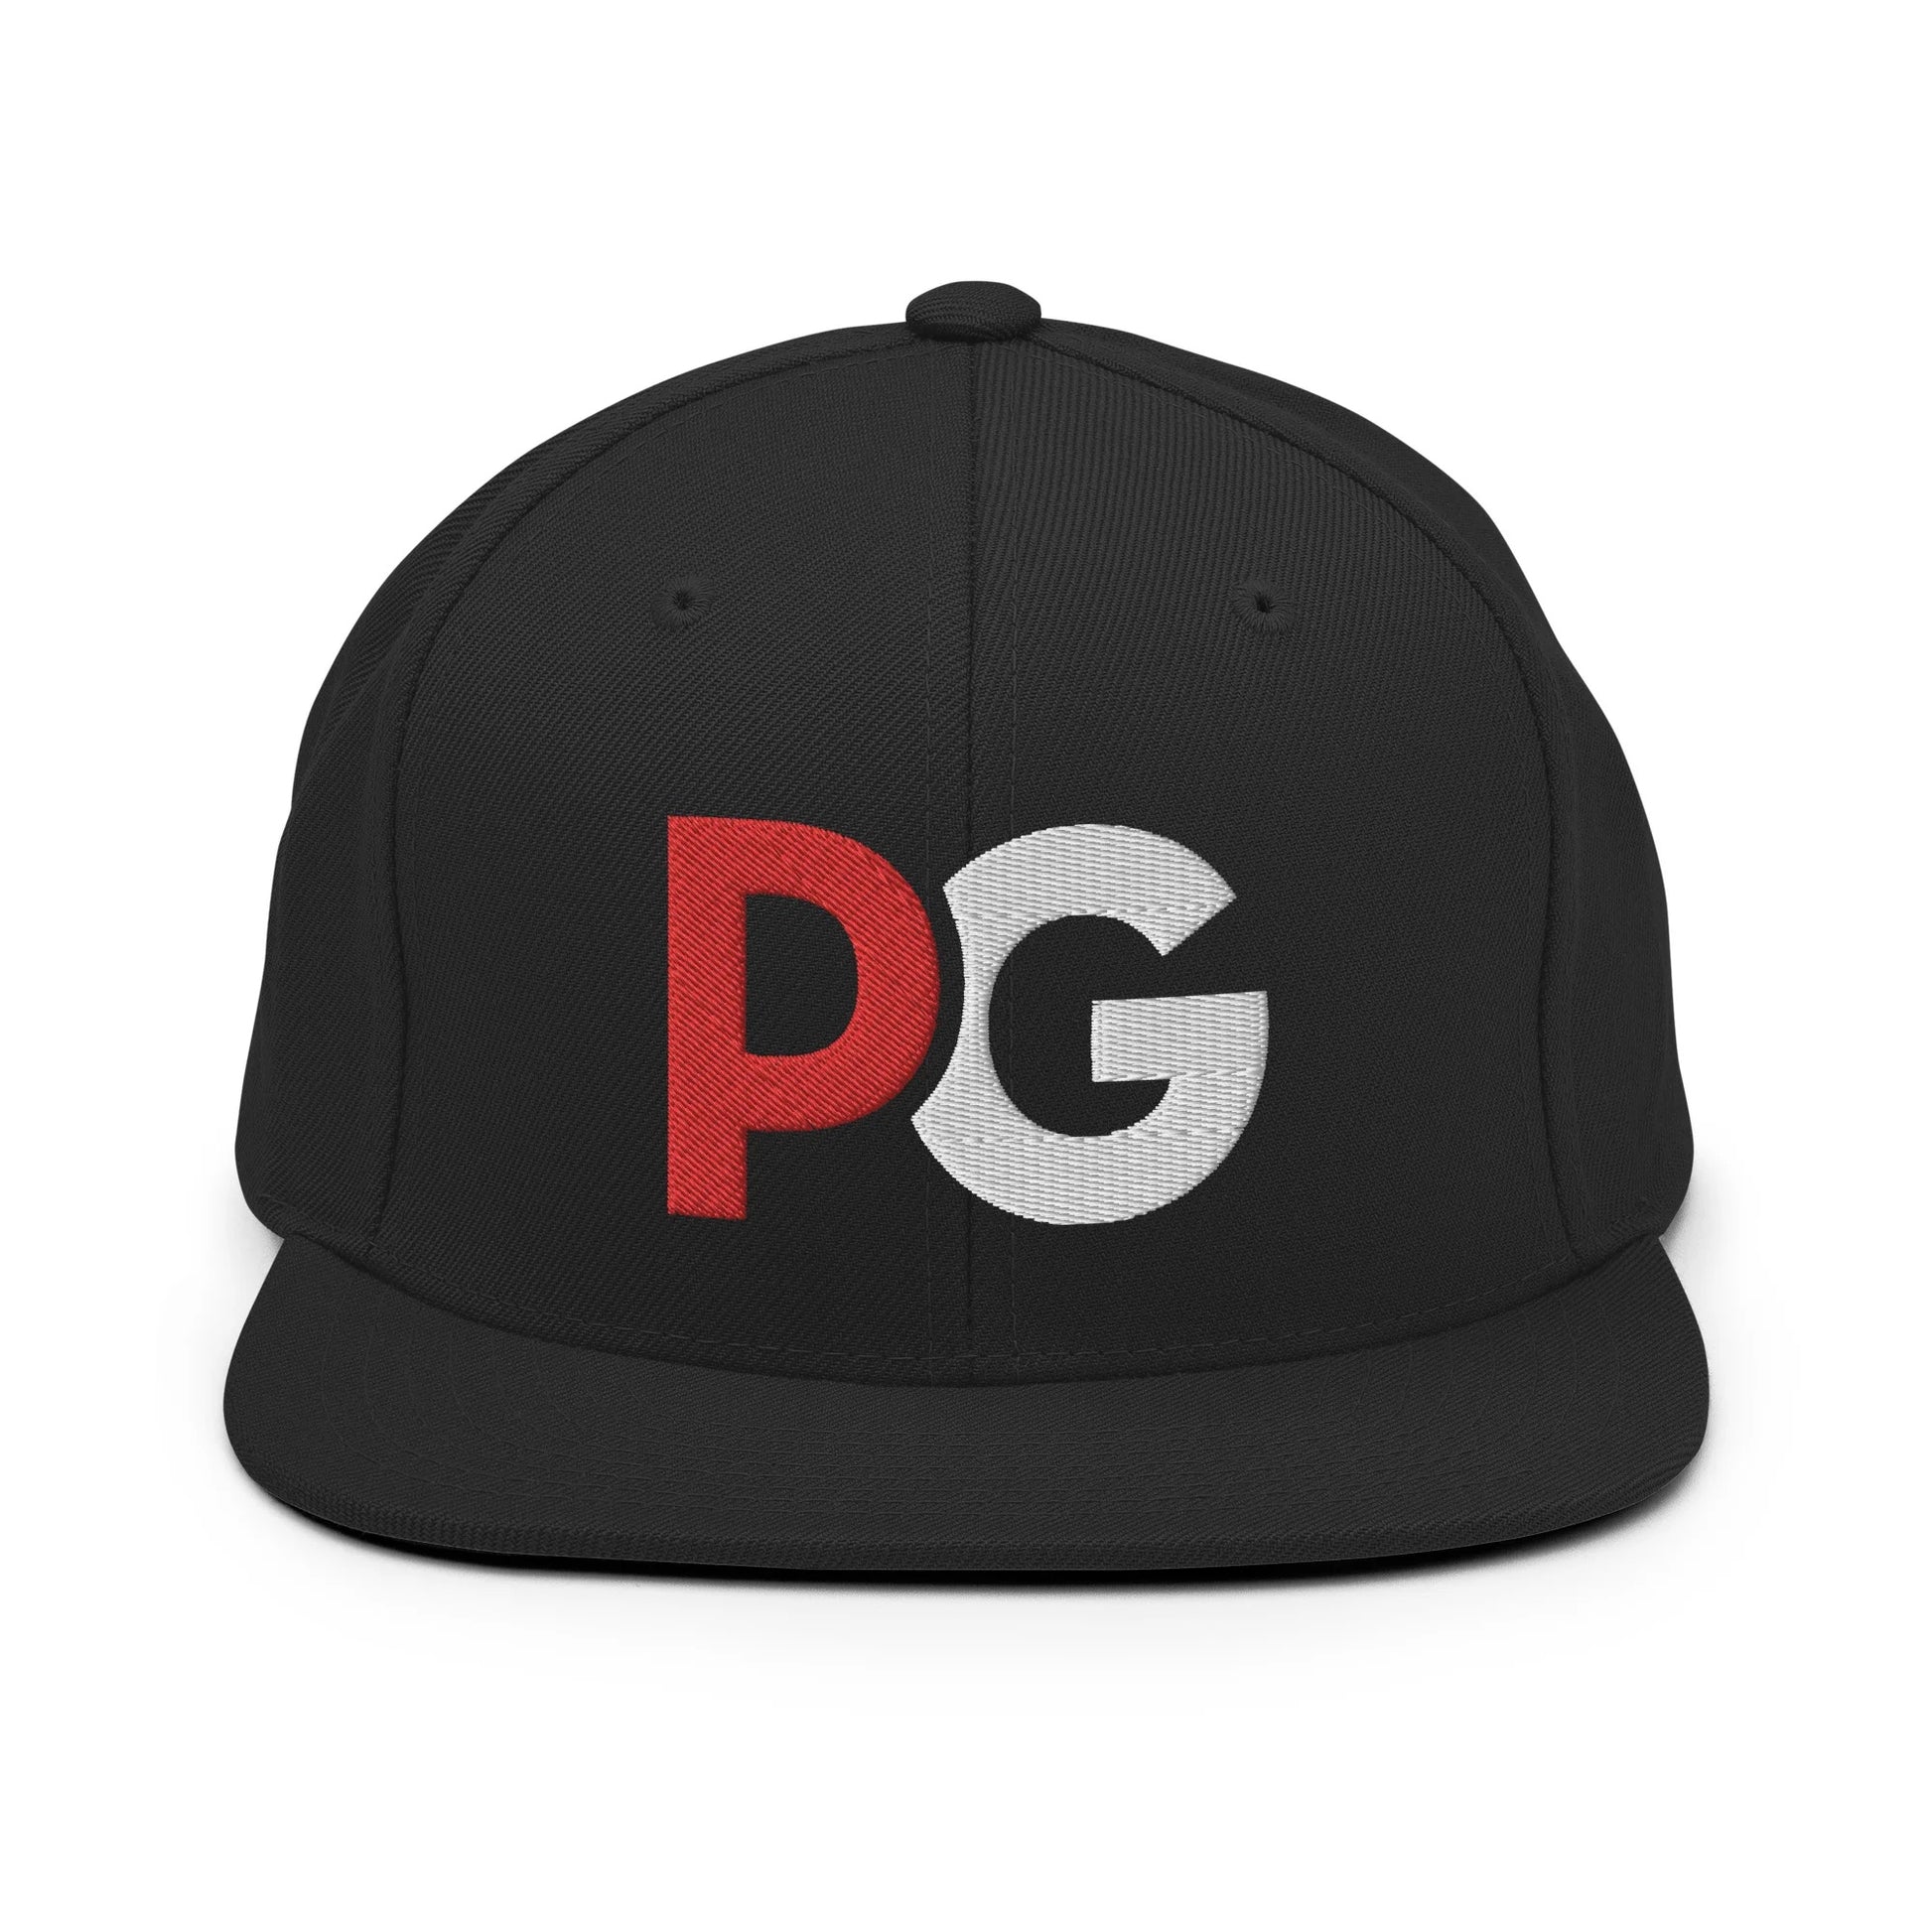 ProfesorGamingTV Snapback Hat by ShowZone in black